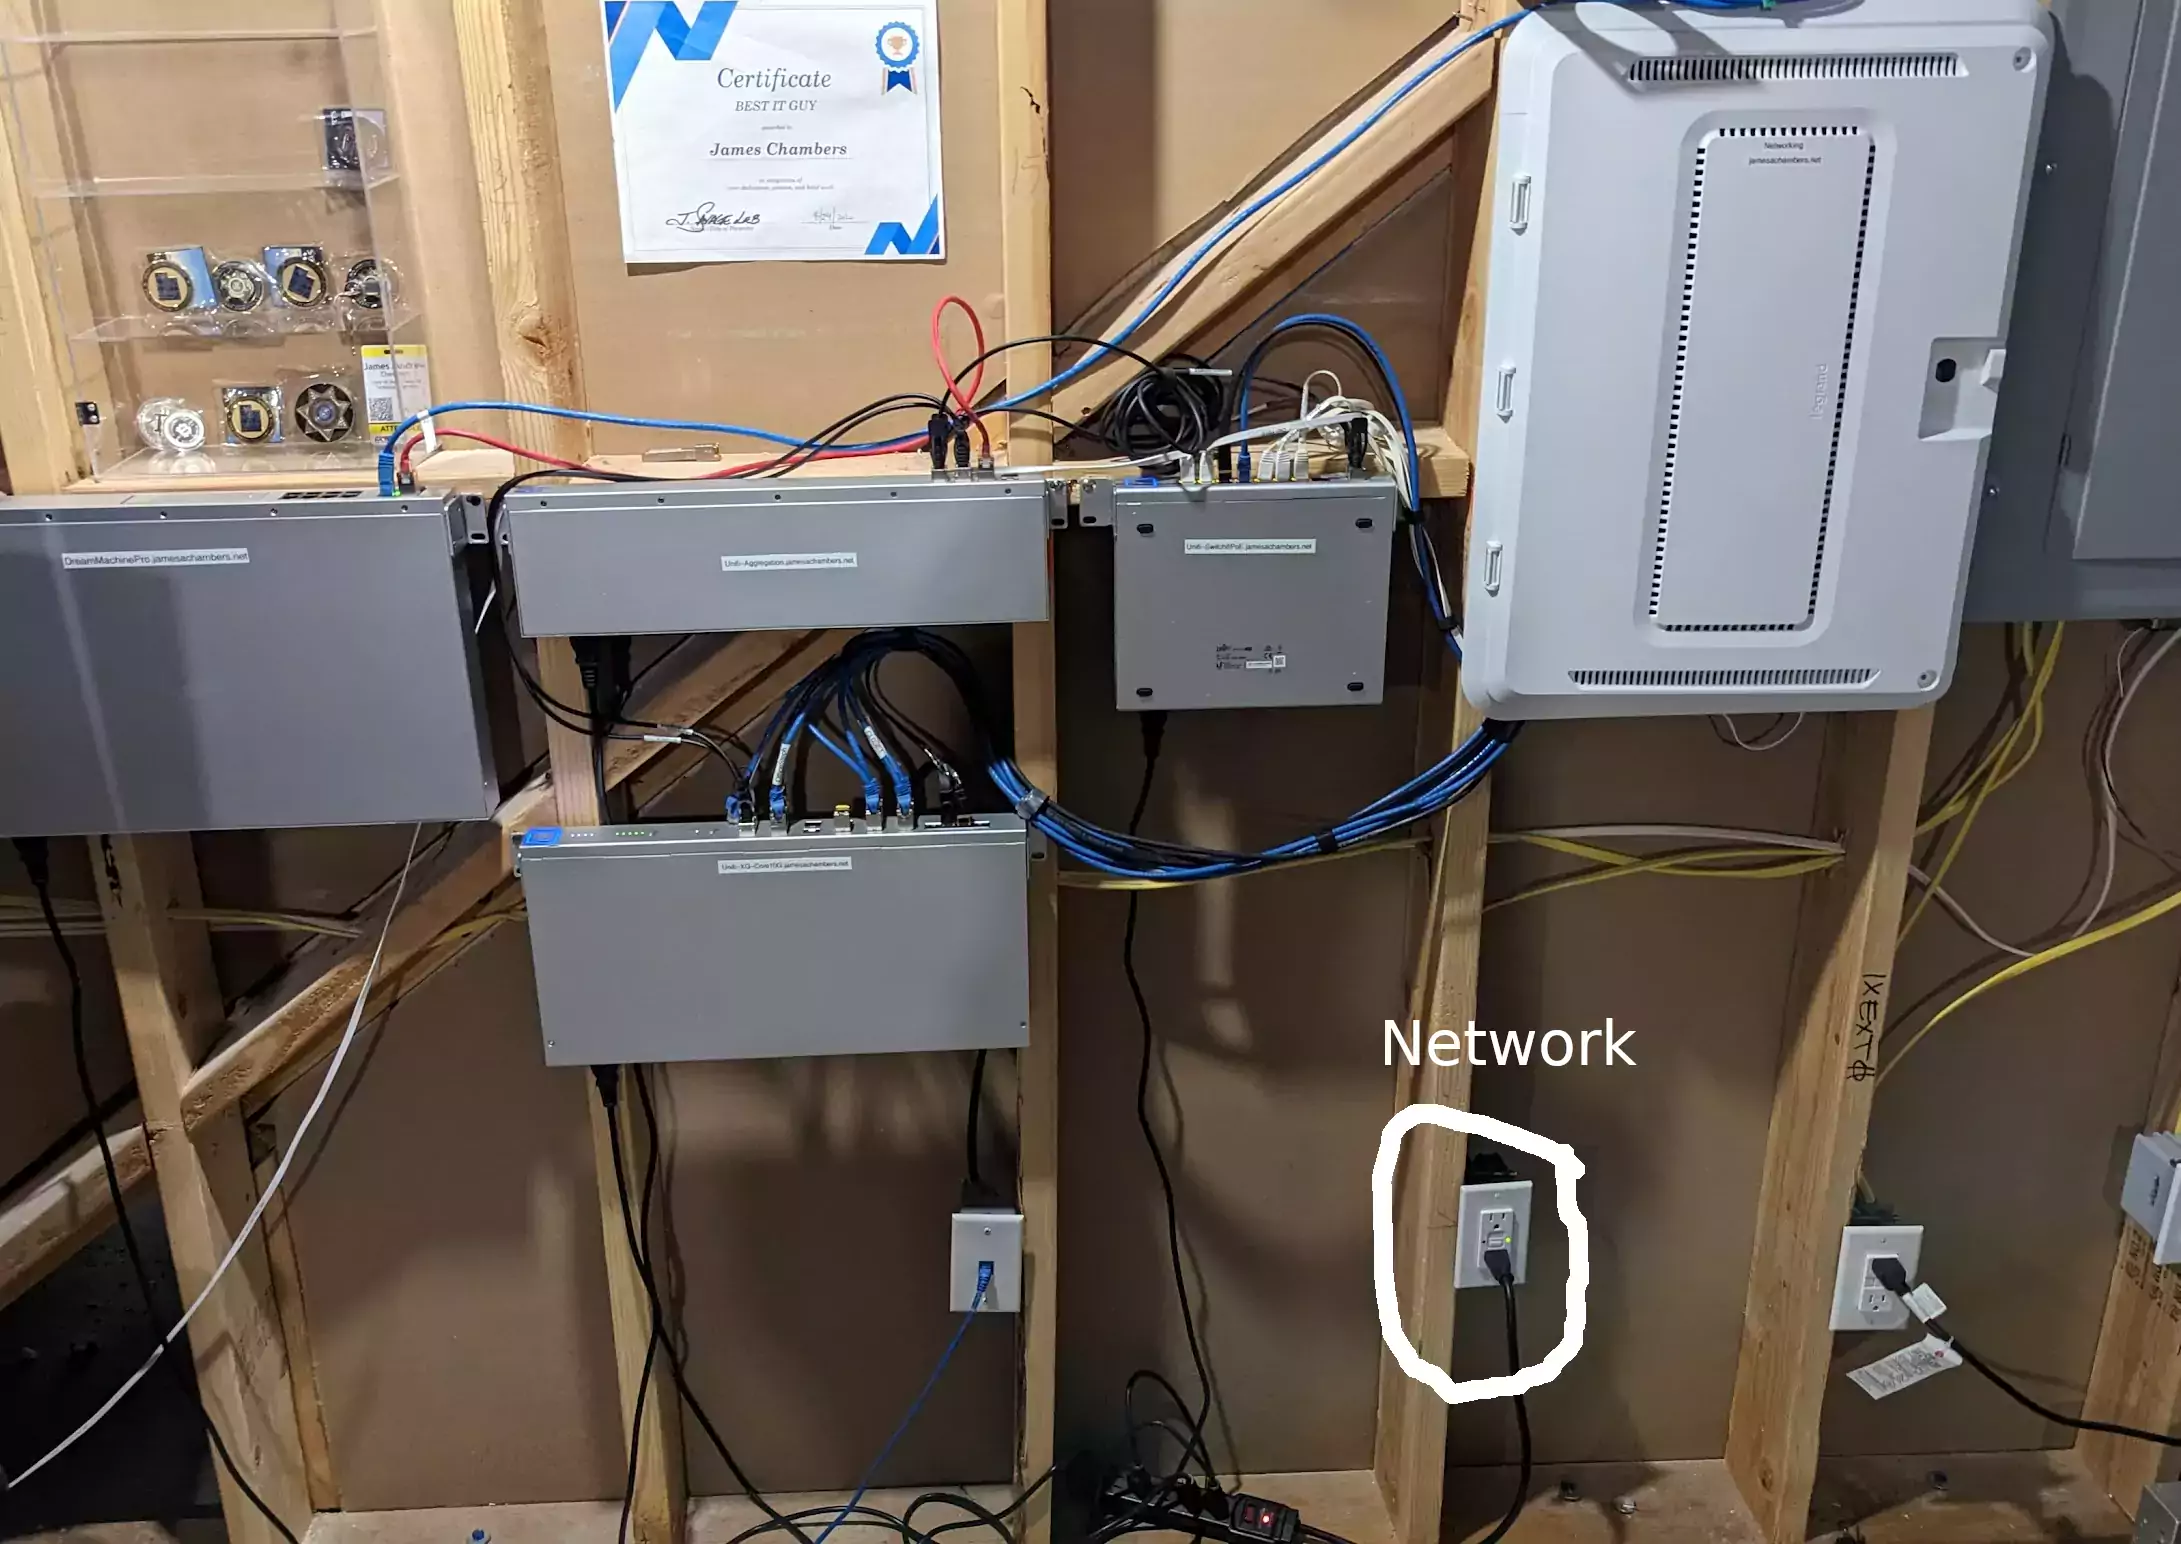 Existing setup before smart plug installation